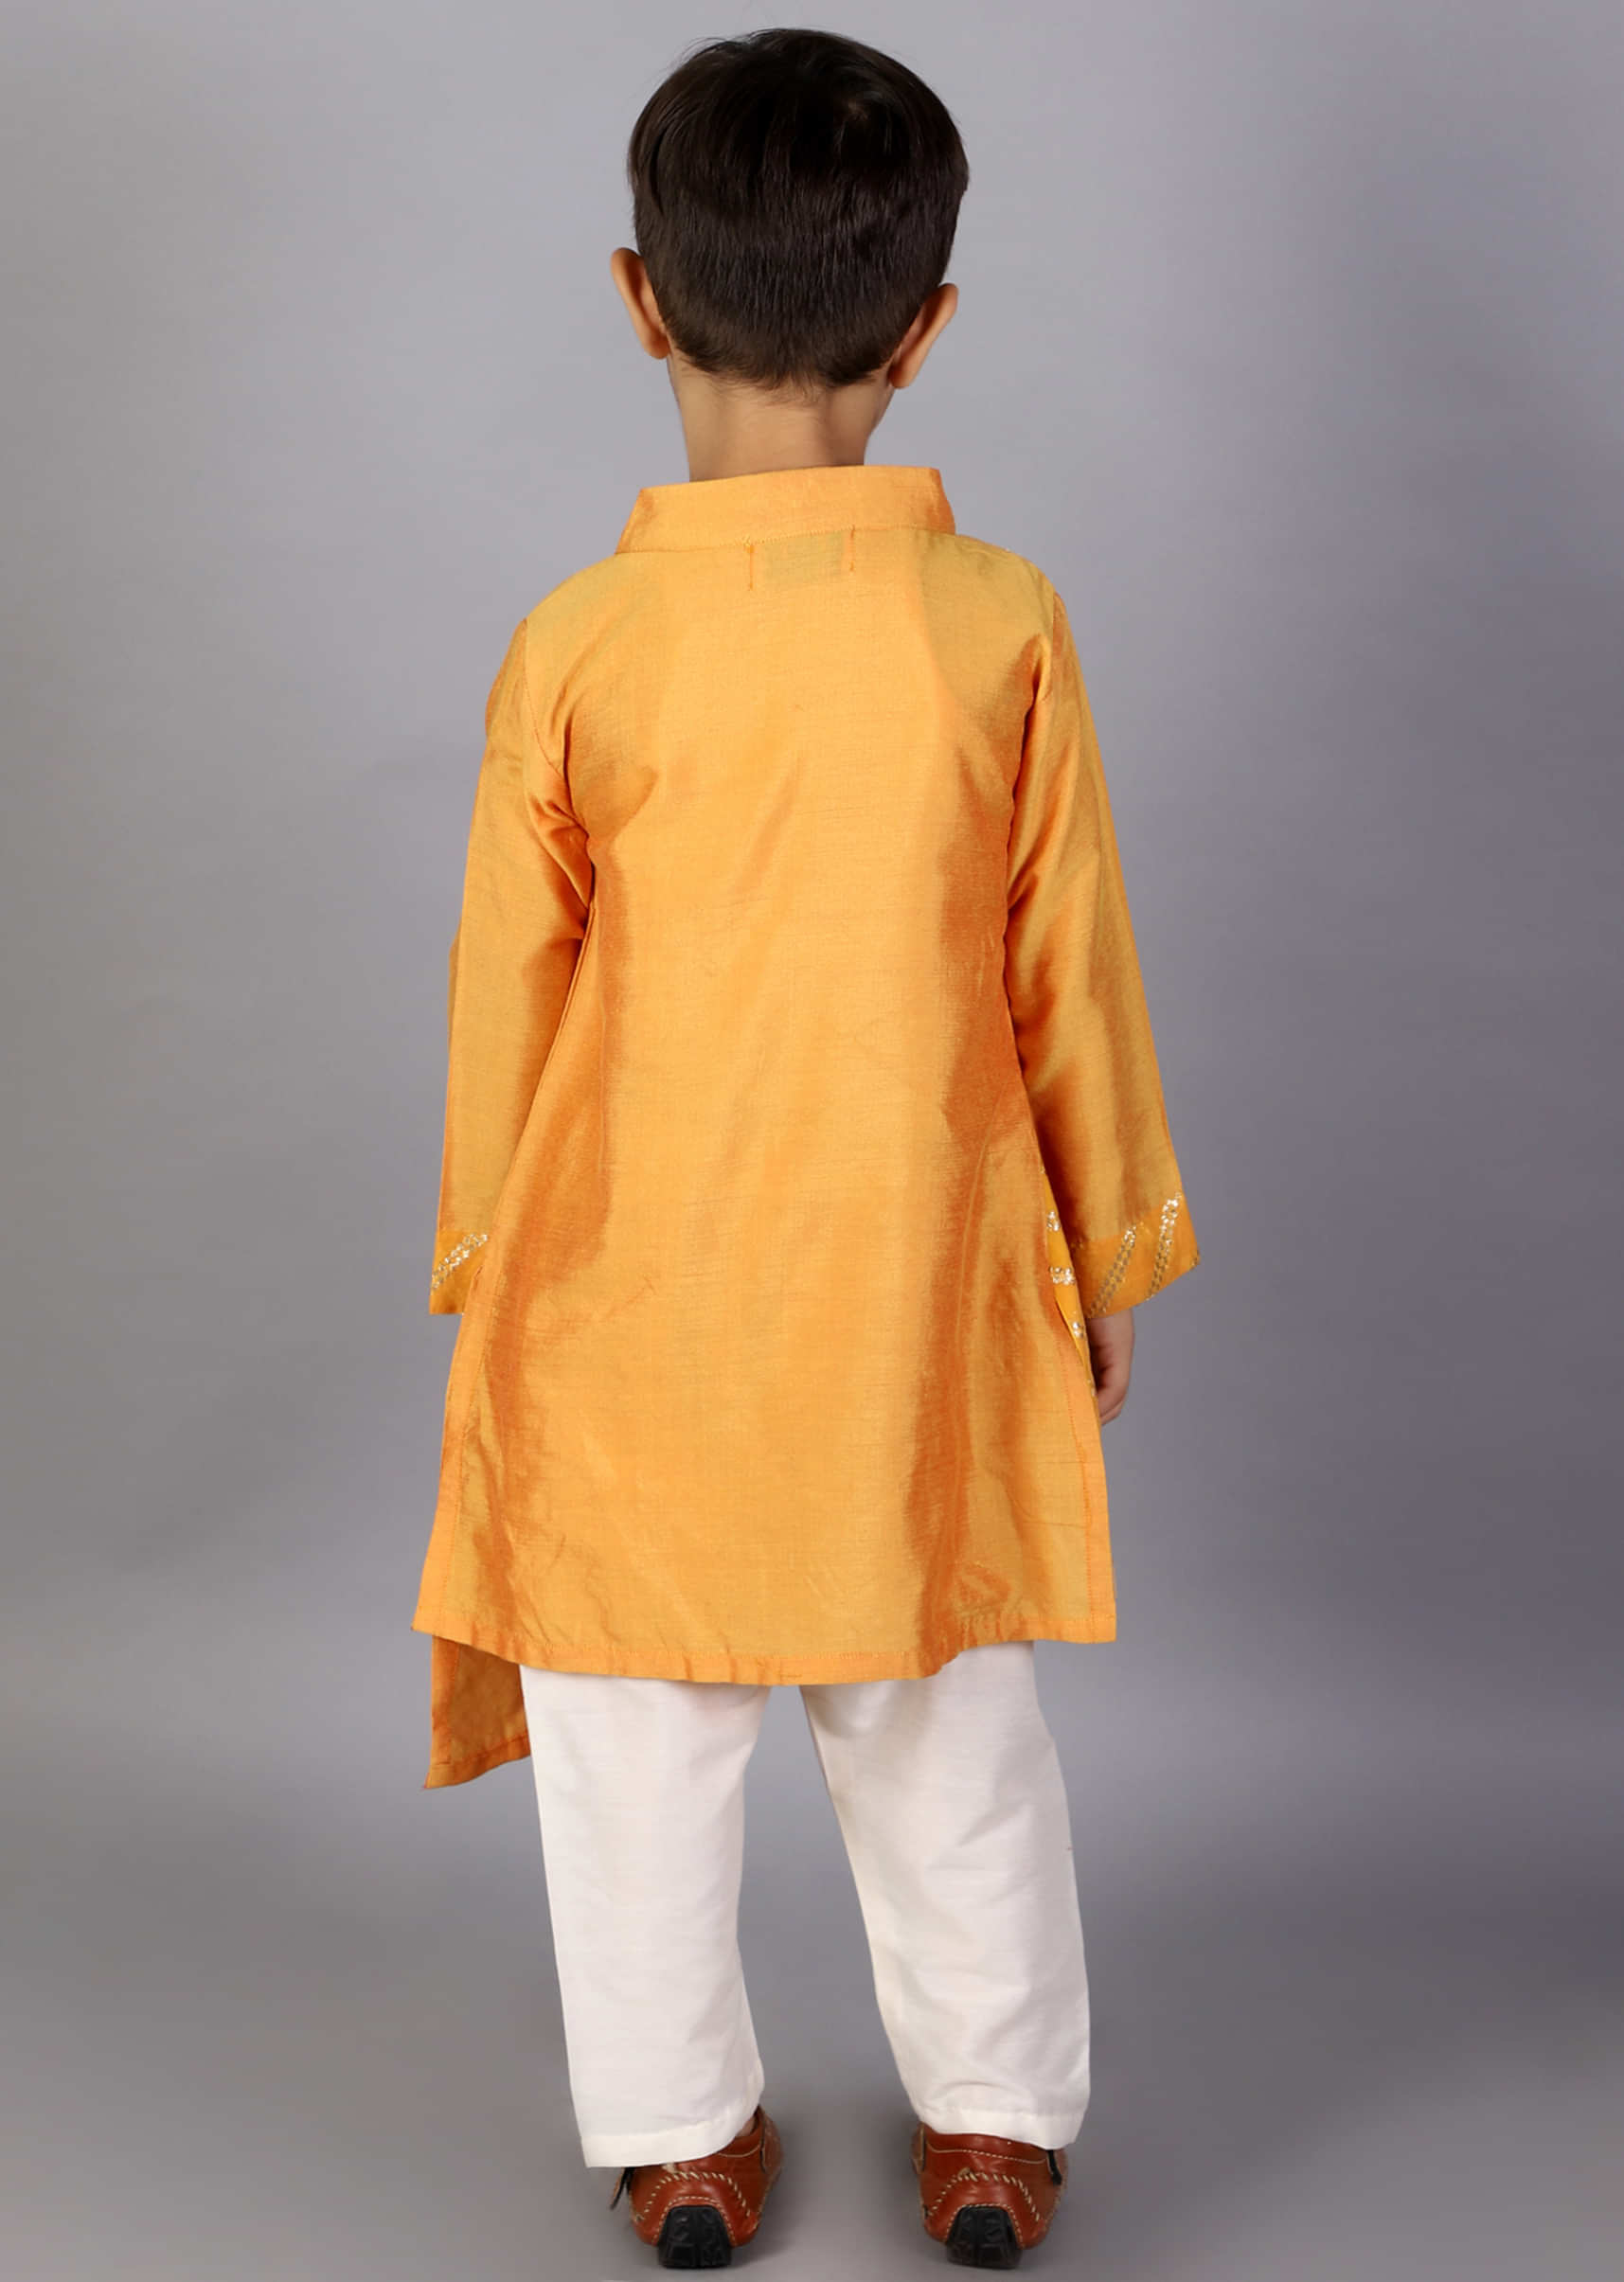 Kalki Boys Orange Assymetrical Kurta With Attached Jacket On One Side Featuring Zari Work